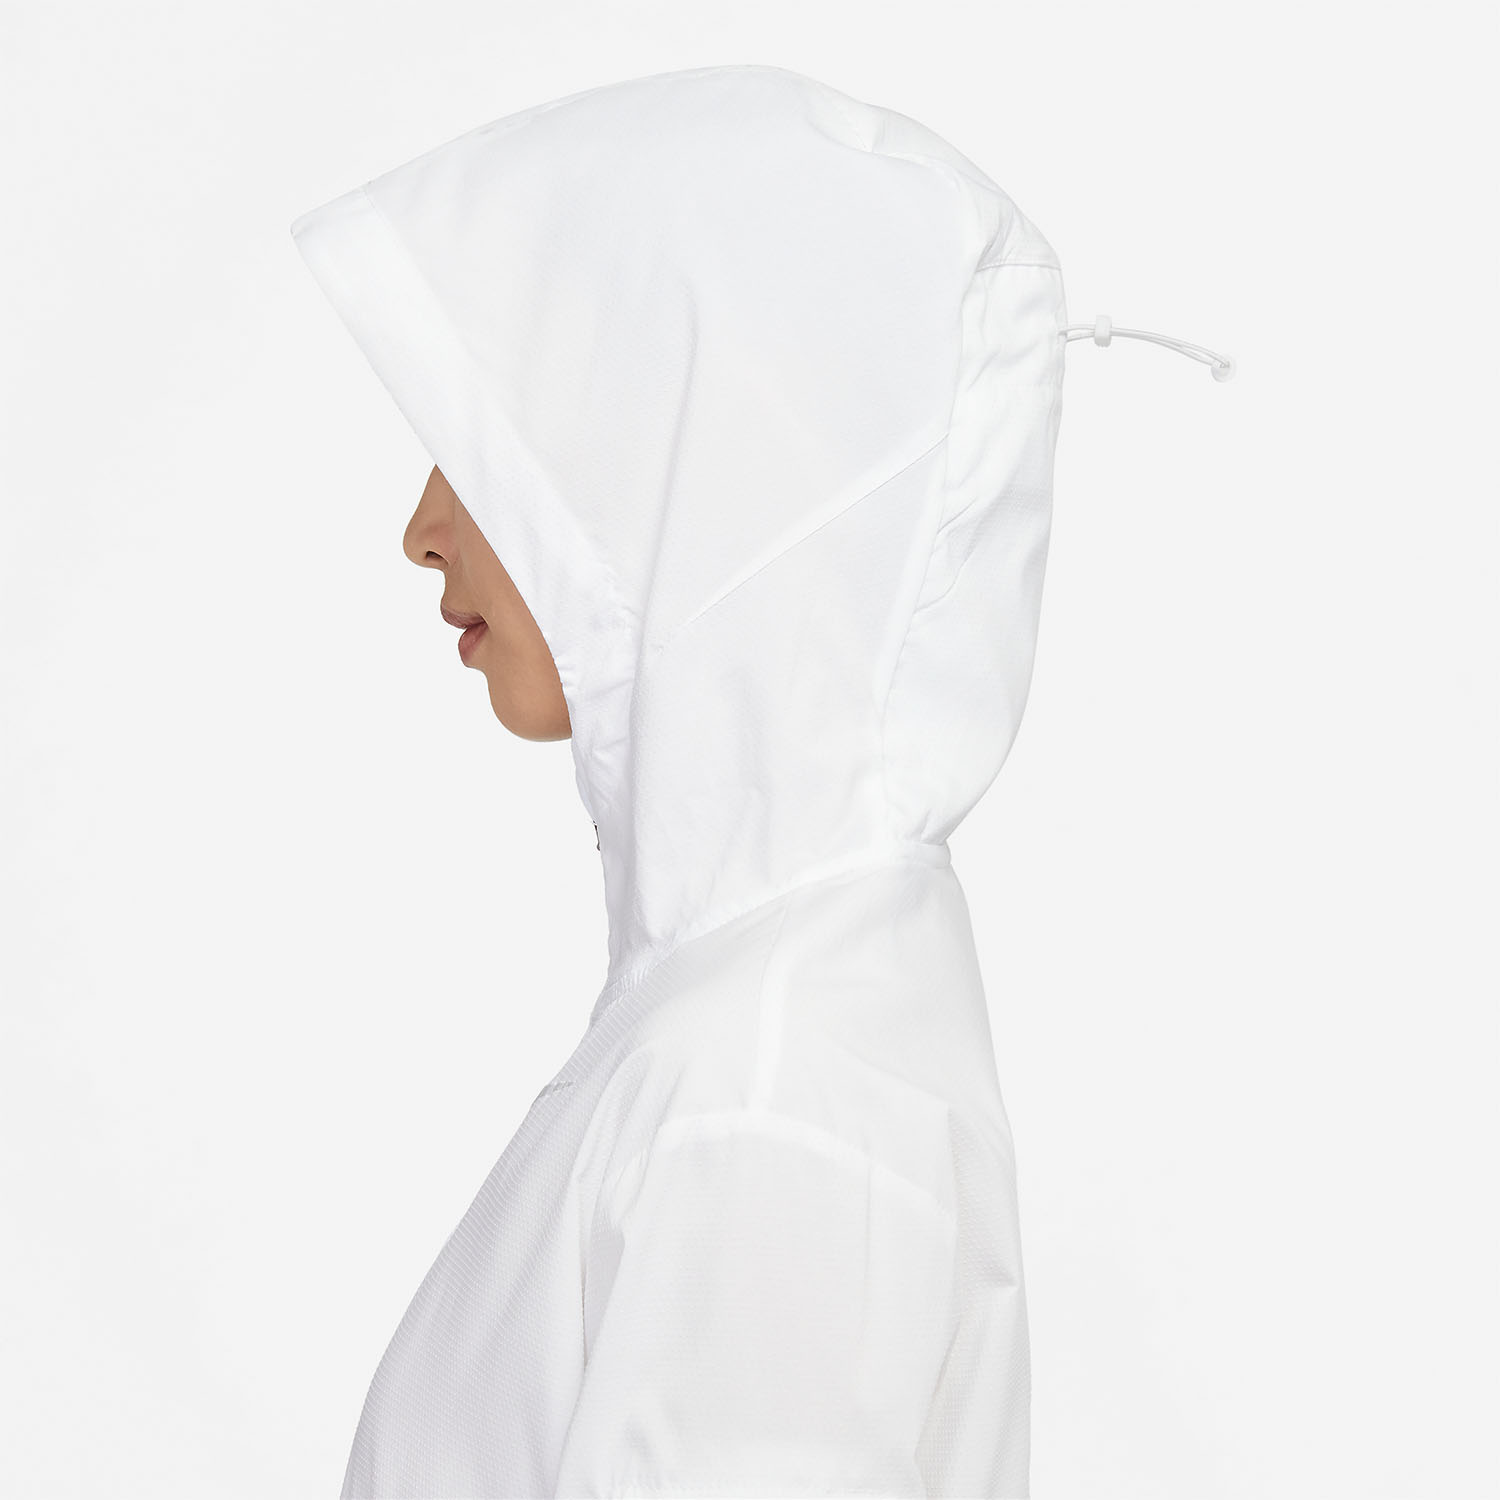 Nike Impossibly Light Jacket - White/Reflective Silver